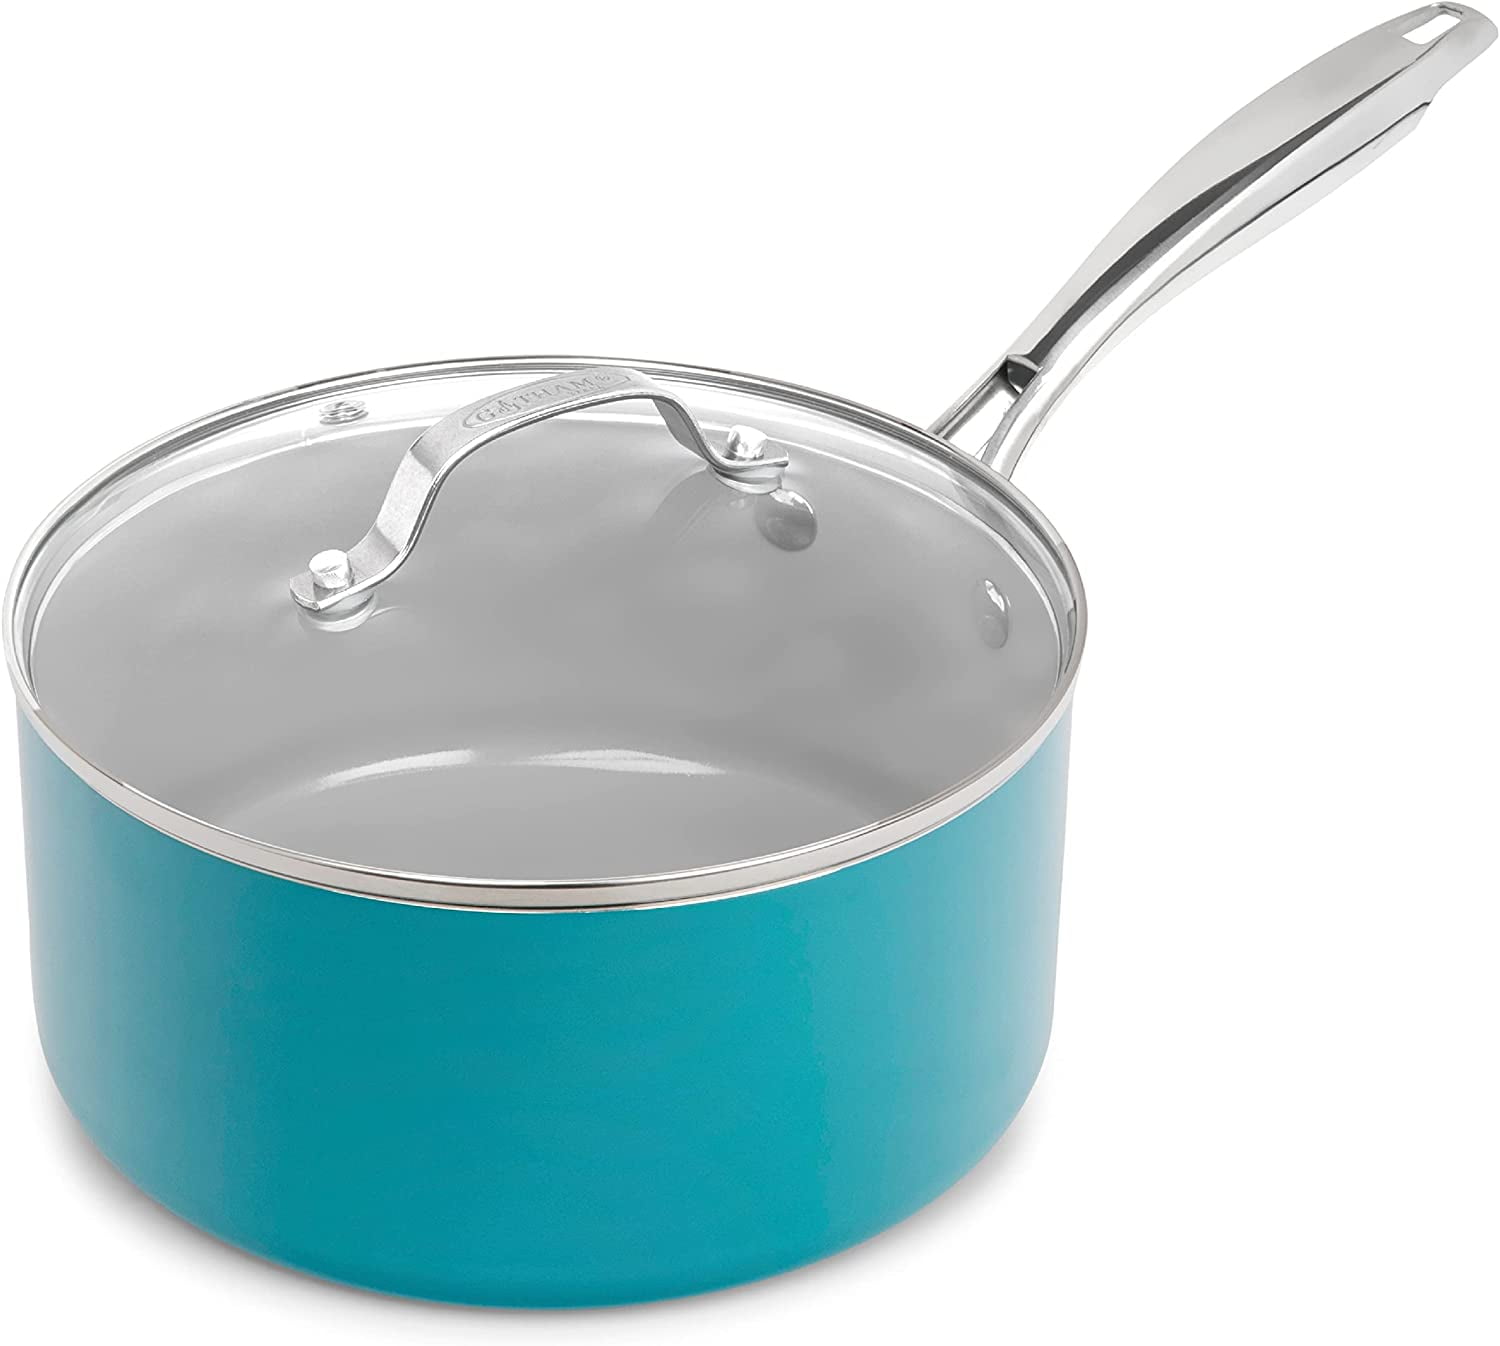 cookware - Tramontina lid stuck to pot - Seasoned Advice